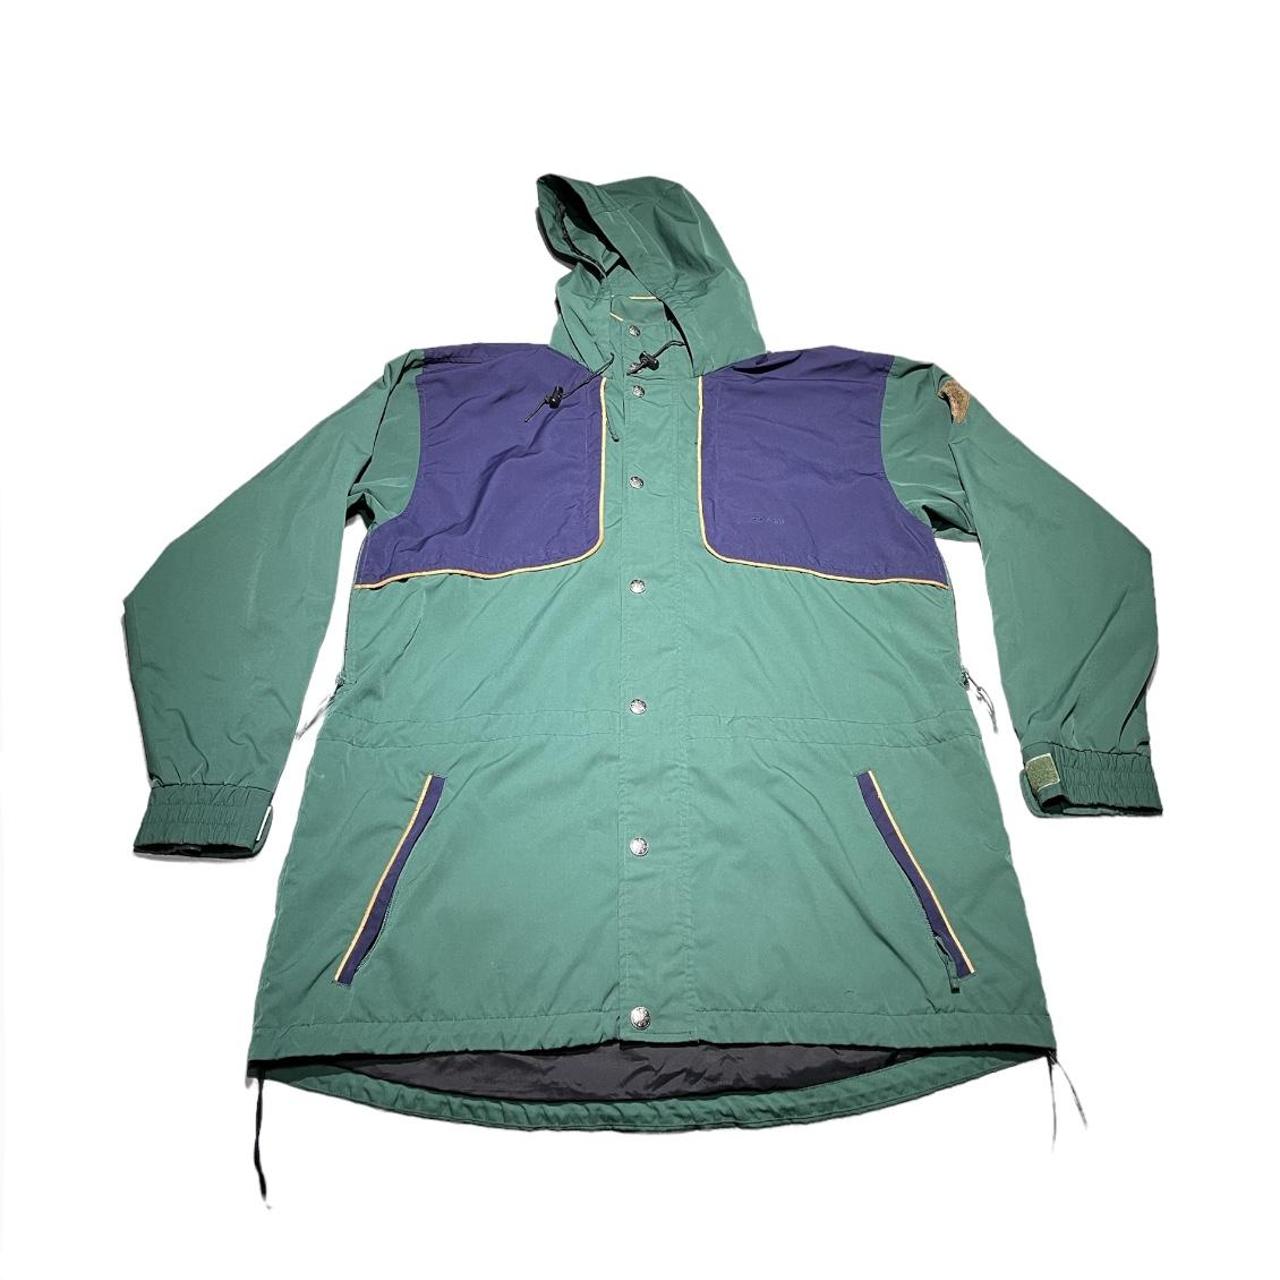 Vintage 90s L.L bean Nordic hiking jacket Size L... - Depop